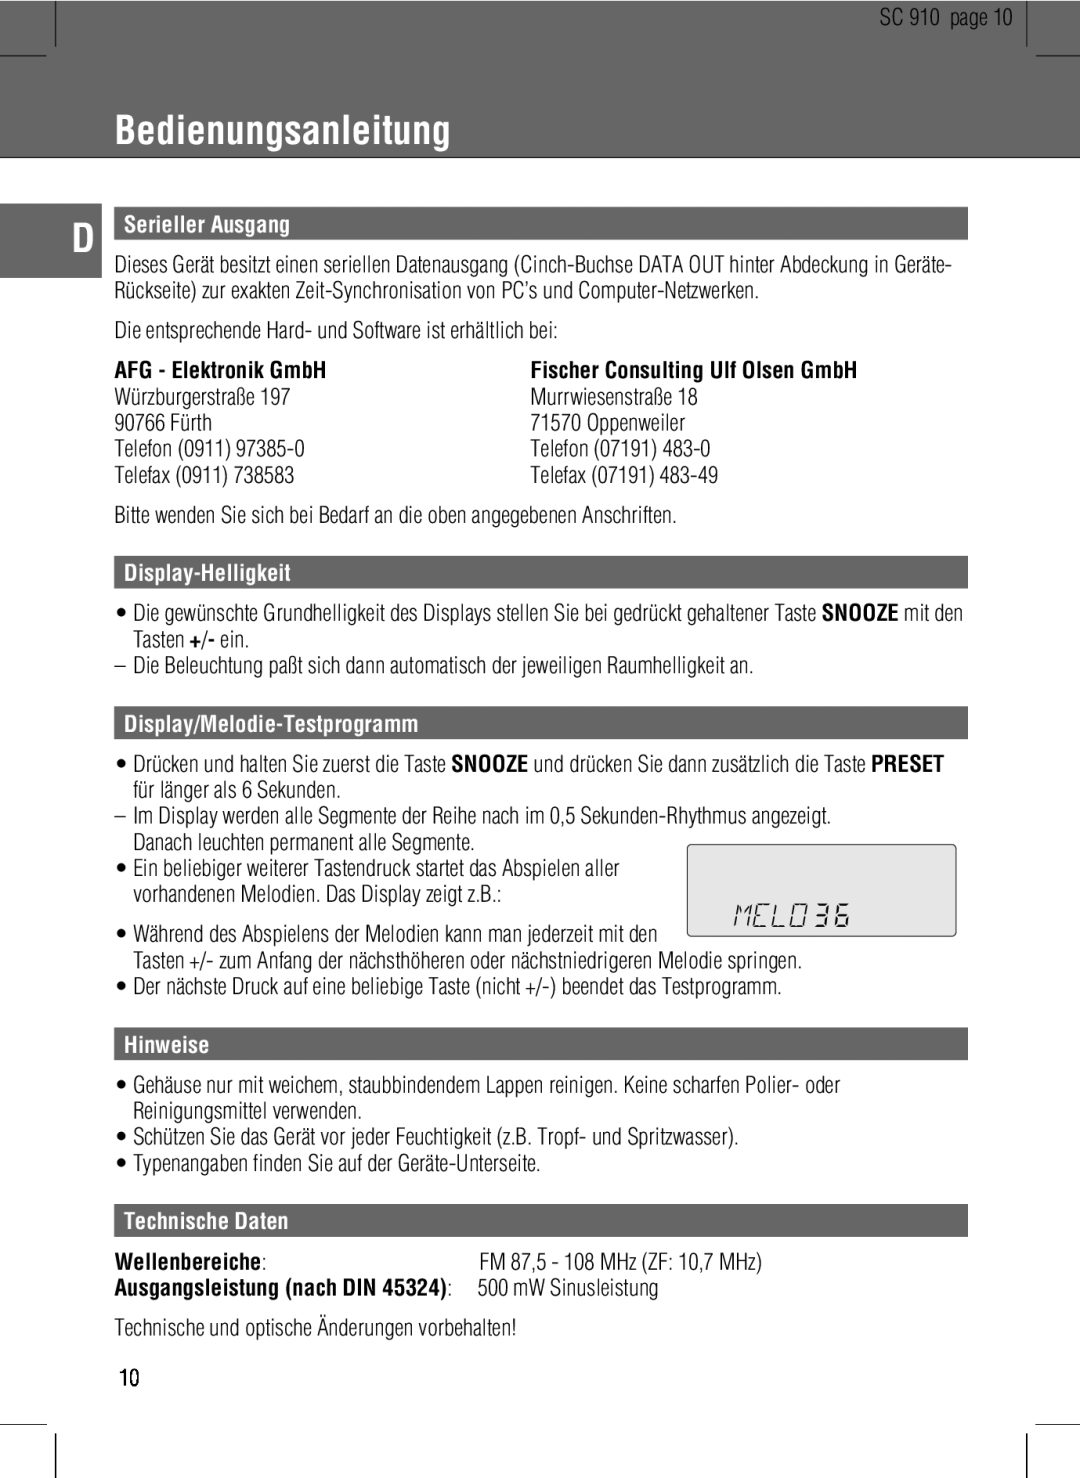 Grundig SC 910 D Serieller Ausgang, AFG - Elektronik GmbH, Display-Helligkeit, Display/Melodie-Testprogramm, Hinweise 